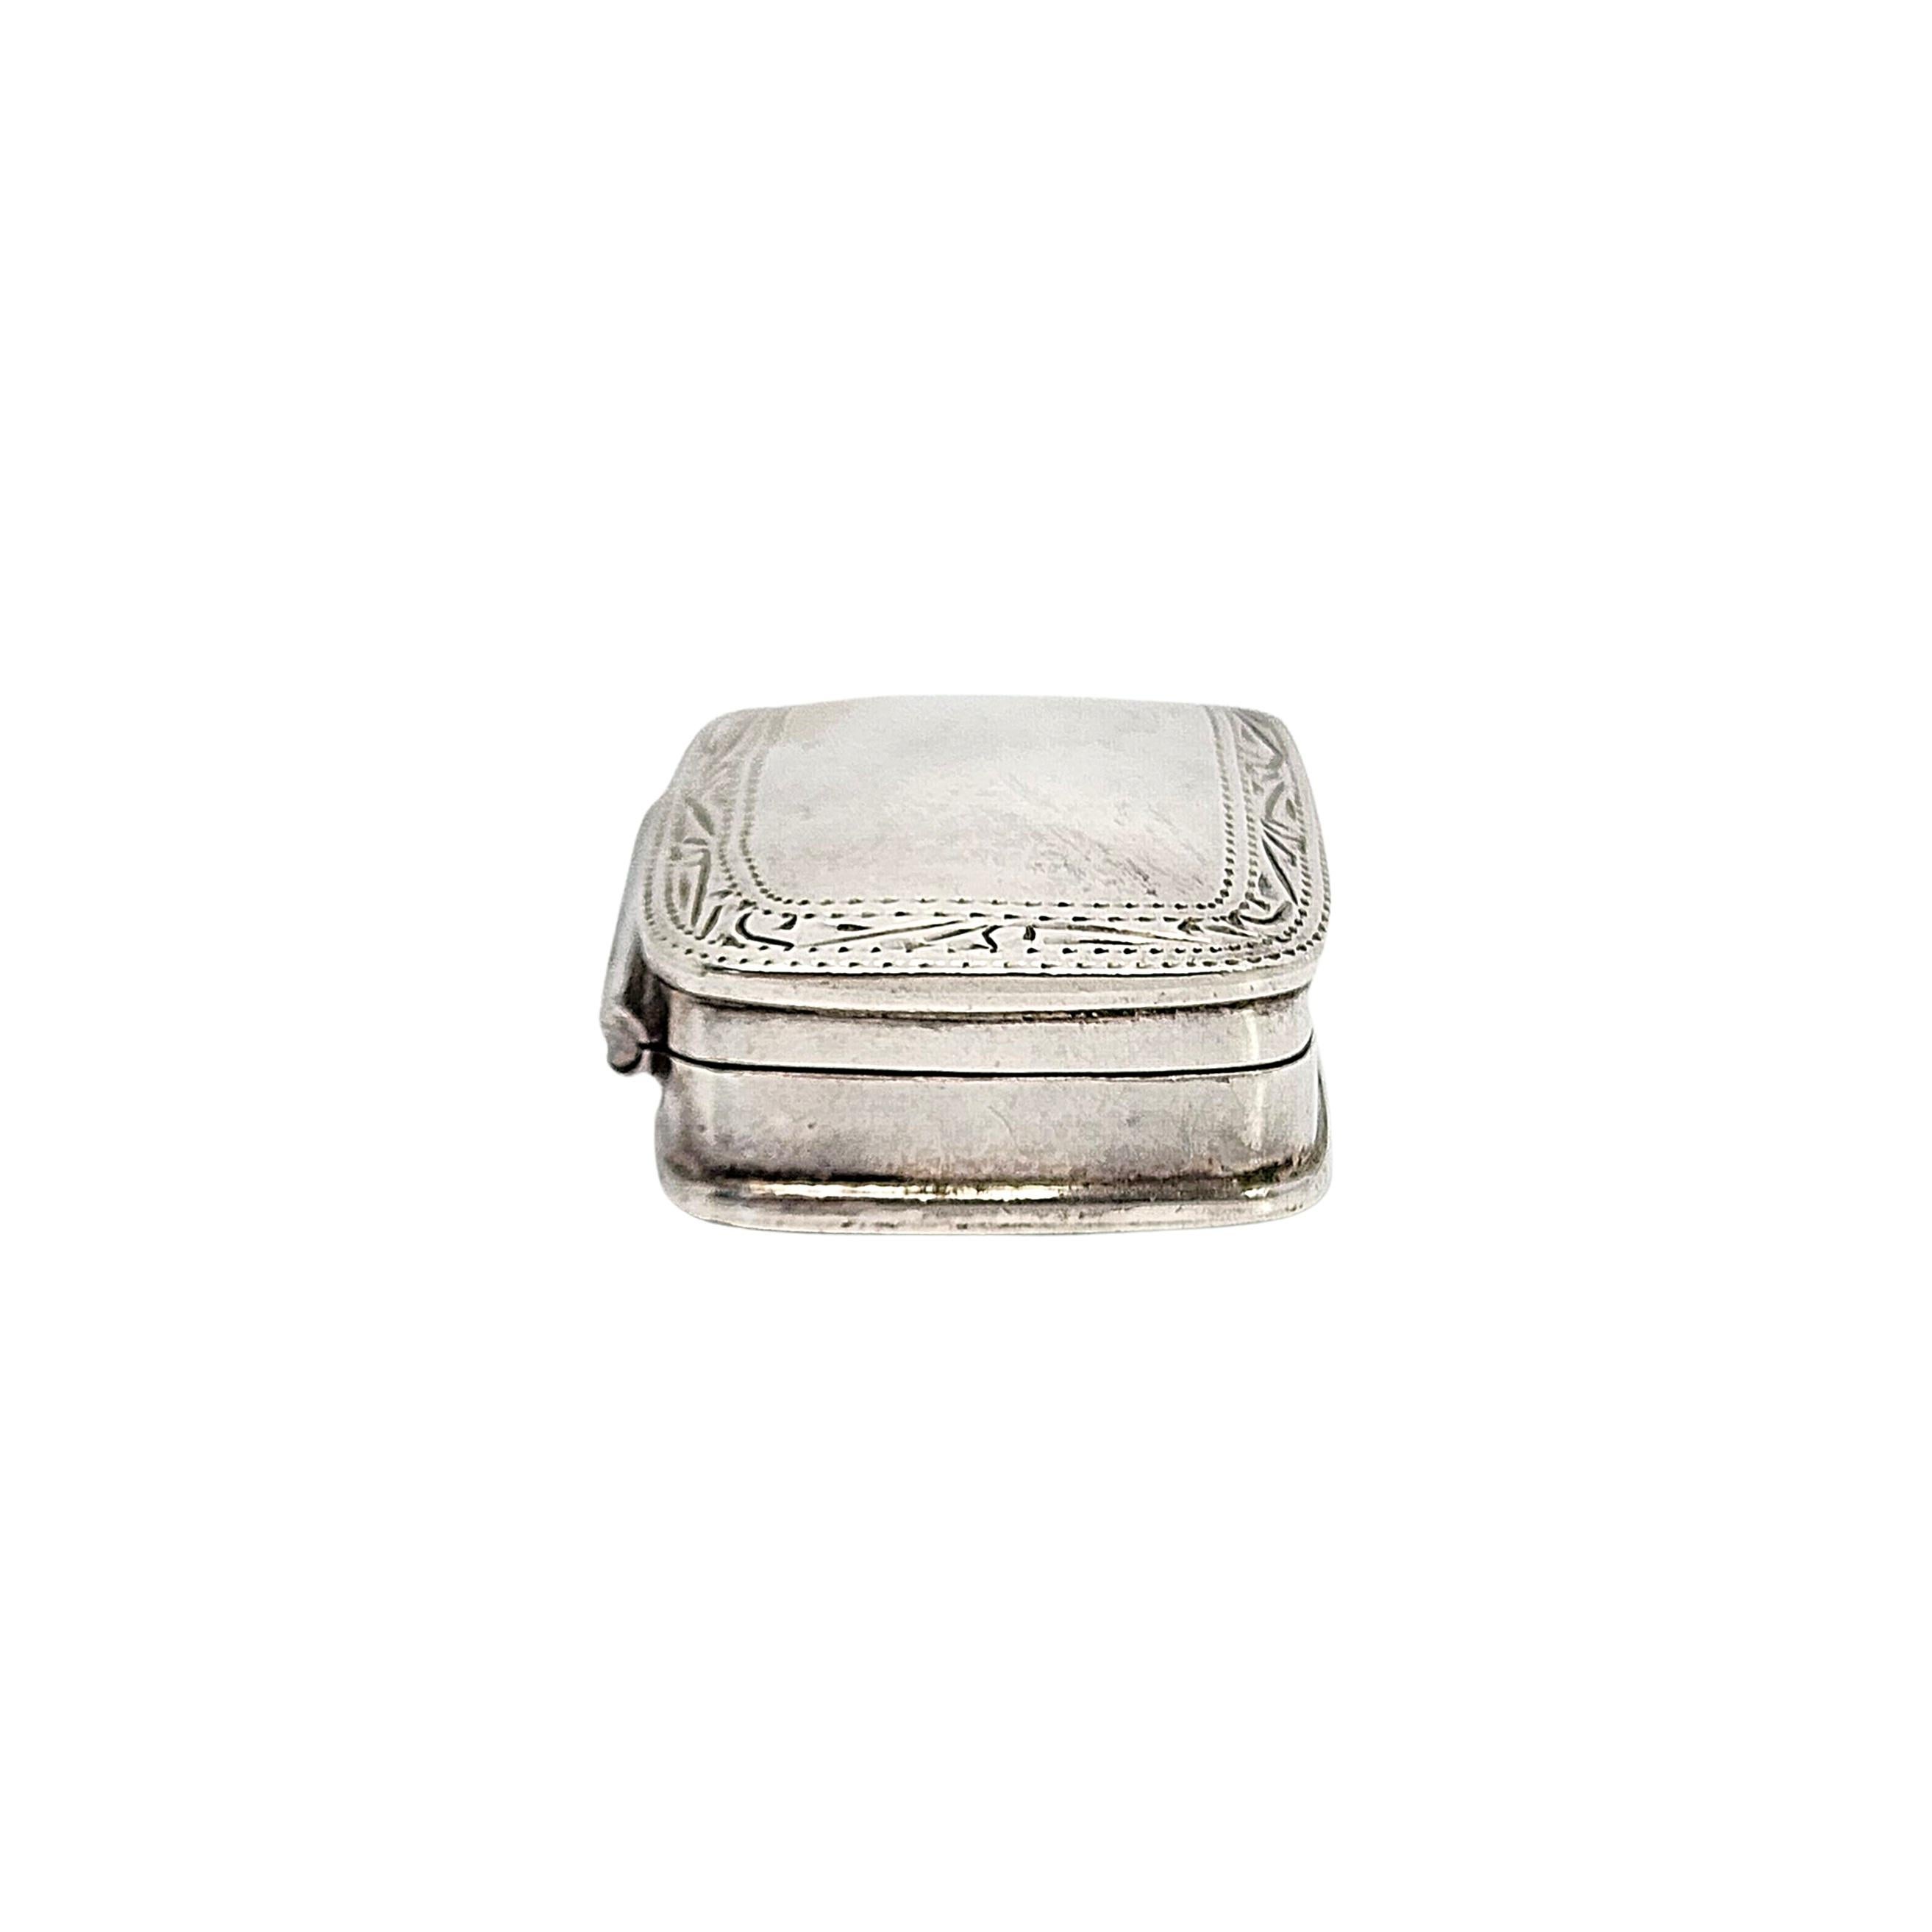 Small Sterling Silver Trinket/Pill Box 4